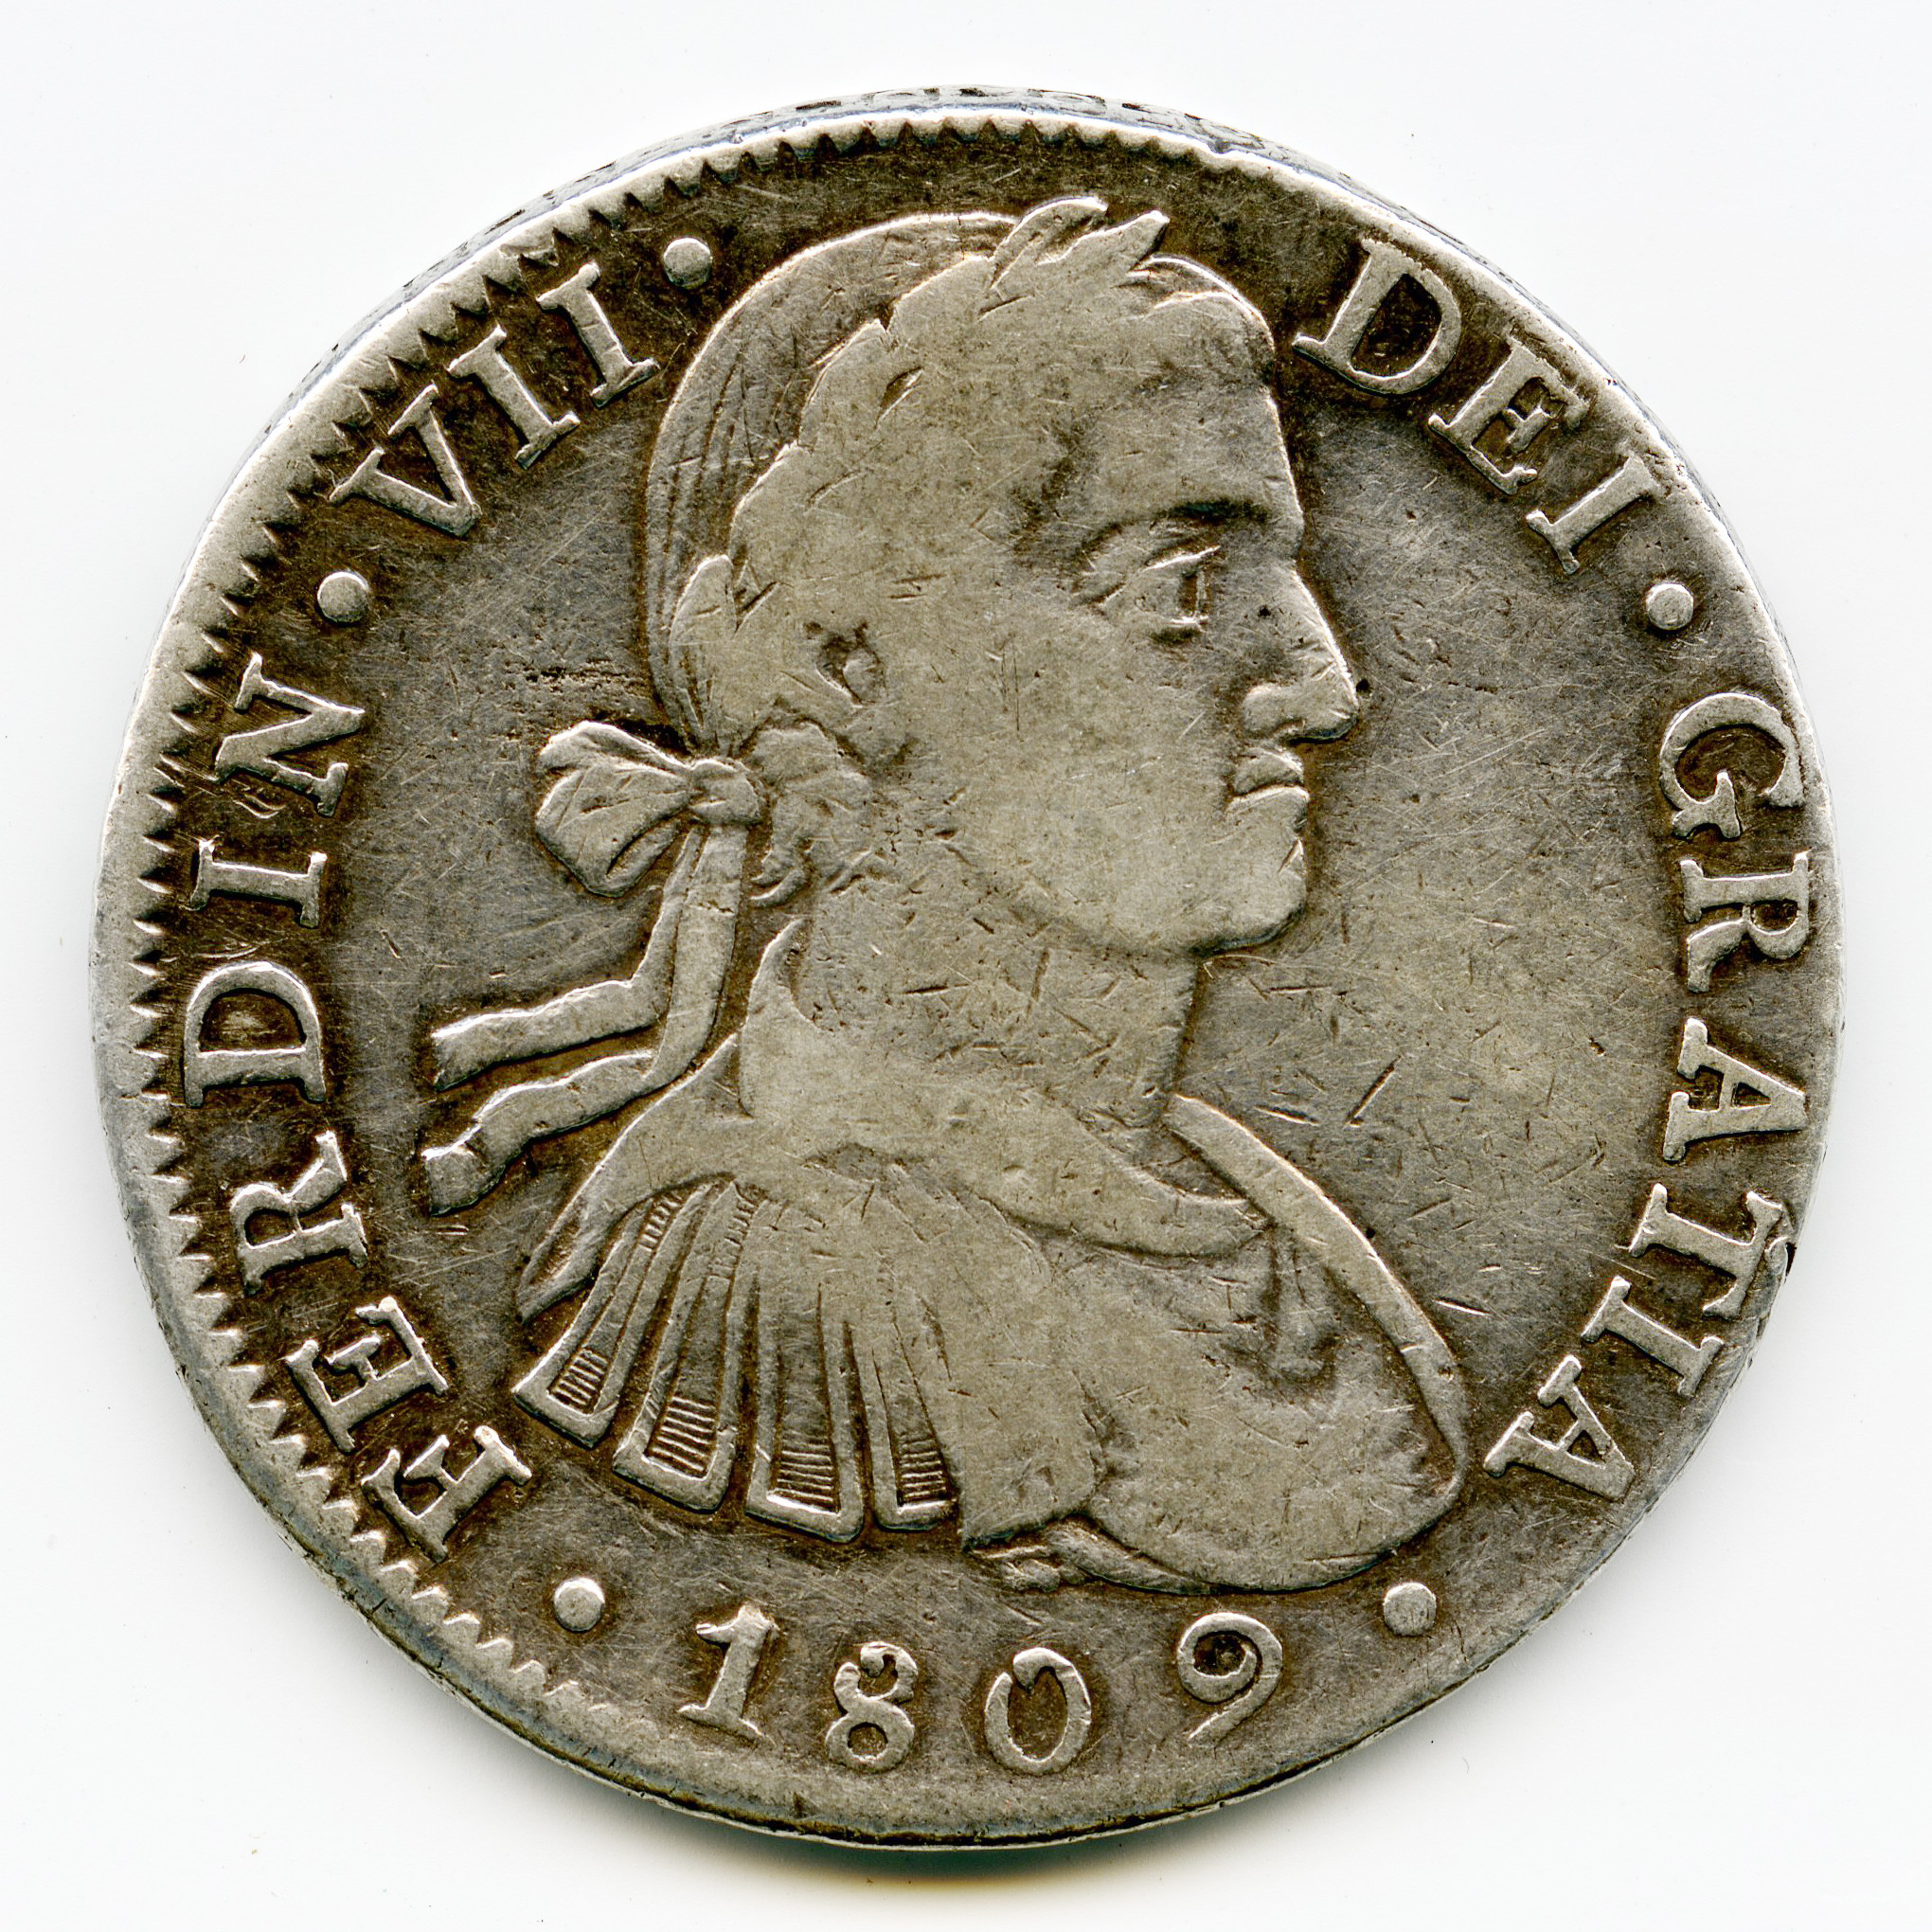 Mexique - Ferdinand VII - 8 reales - 1809 TH avers